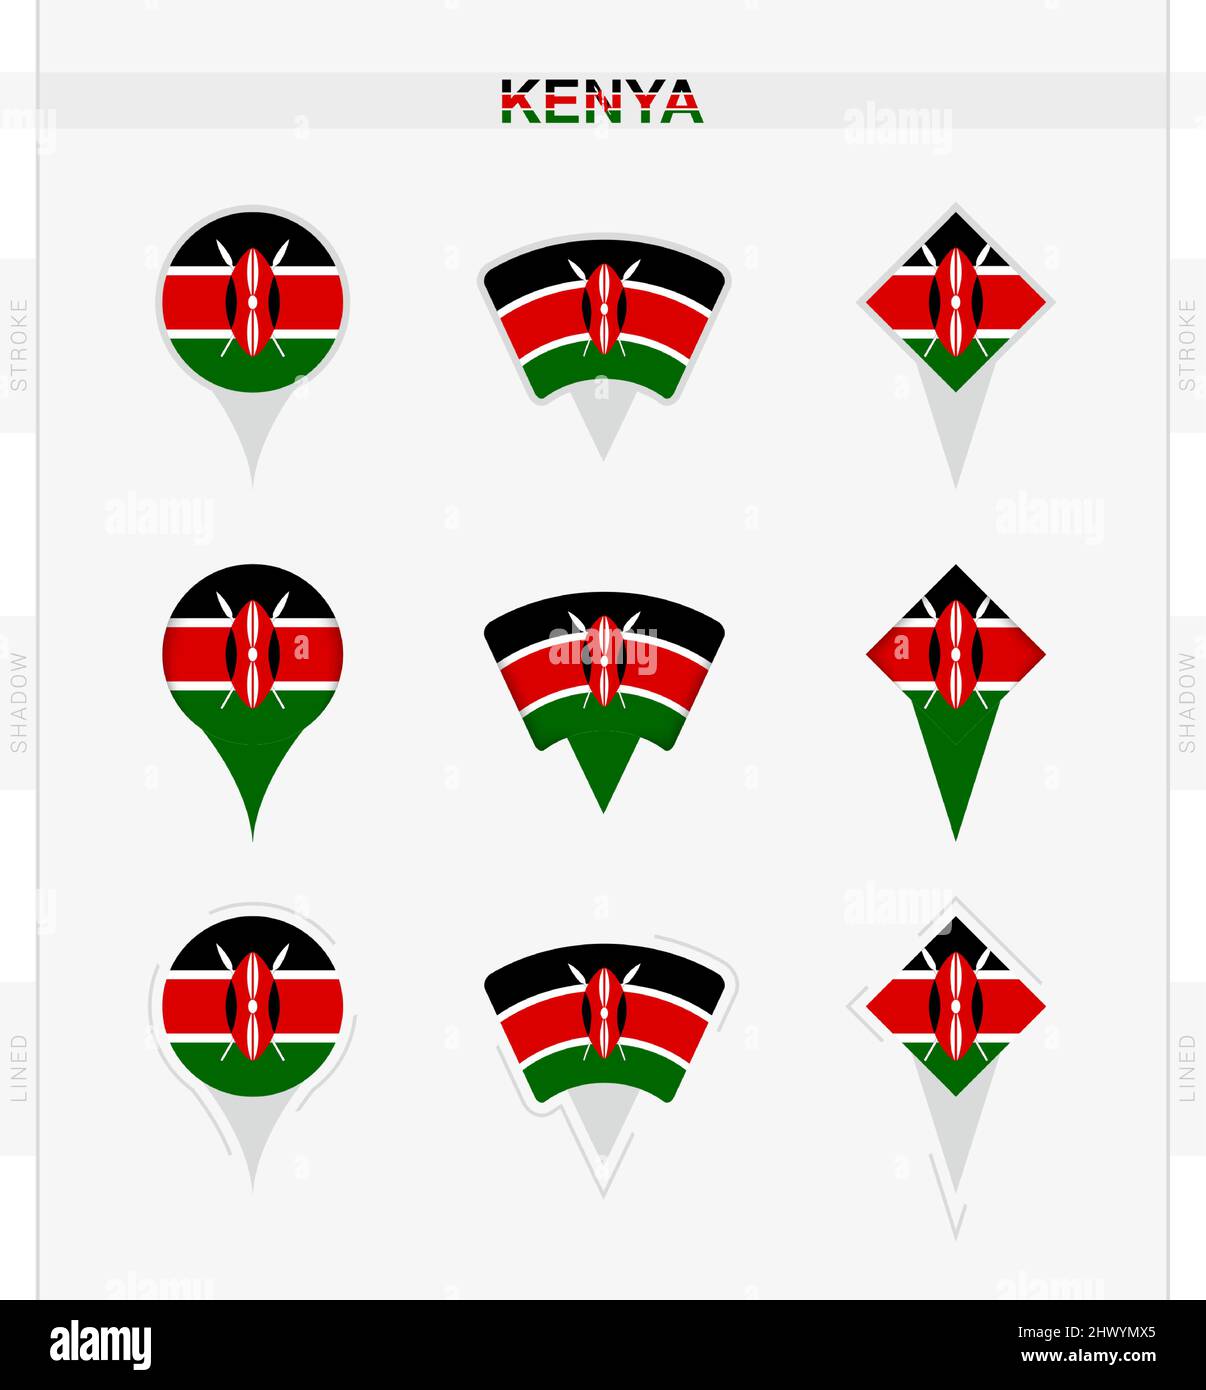 Kenya flag, set of location pin icons of Kenya flag. Vector illustration of national symbols. Stock Vector